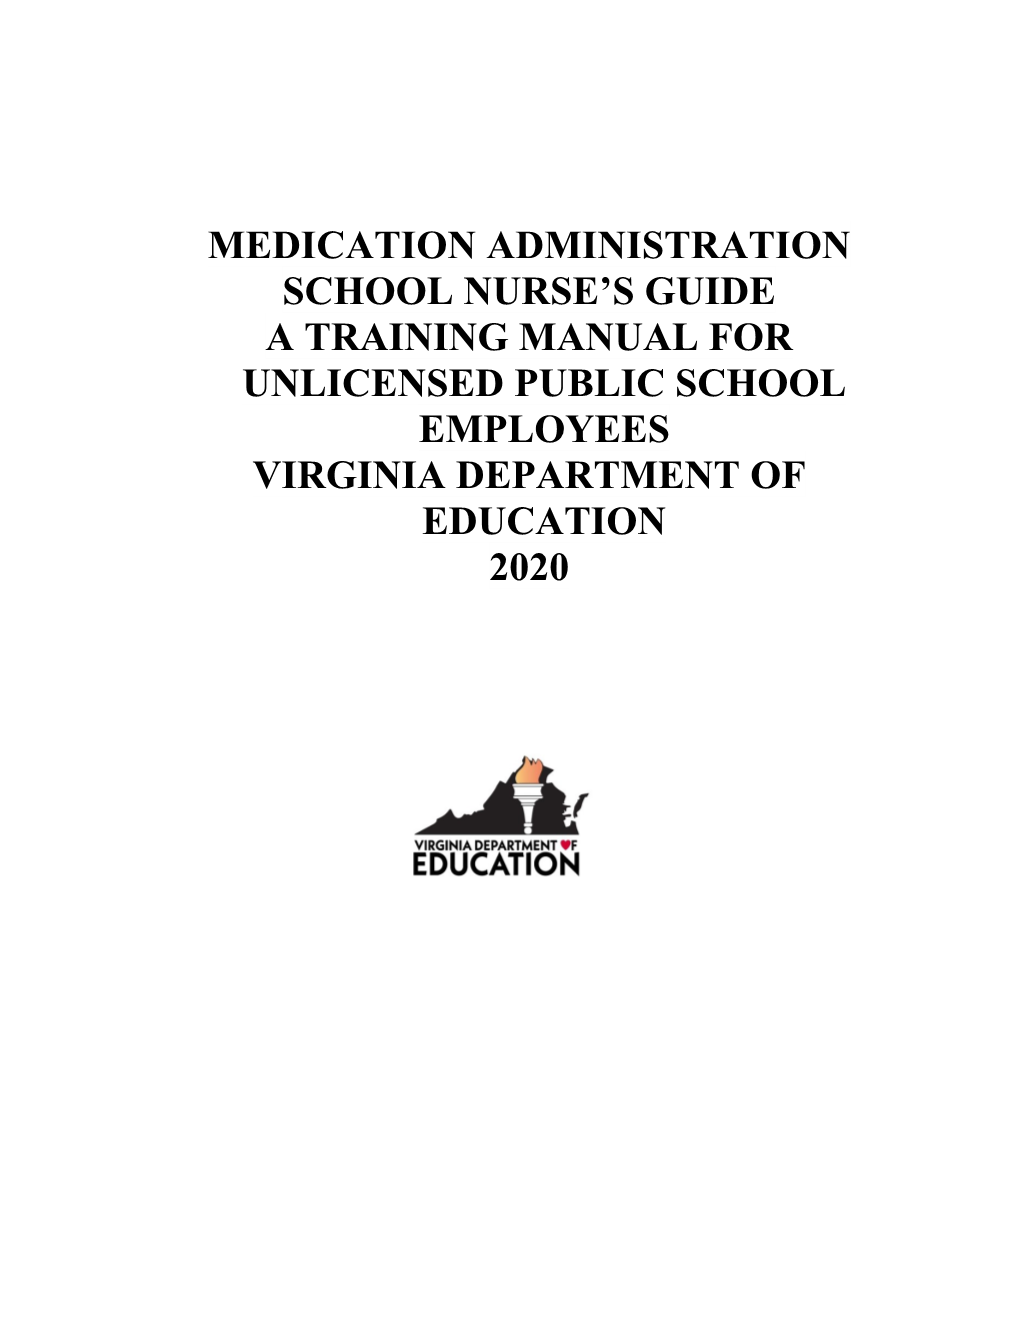 Medication Administration School Nurse's Guide: a Training Manual